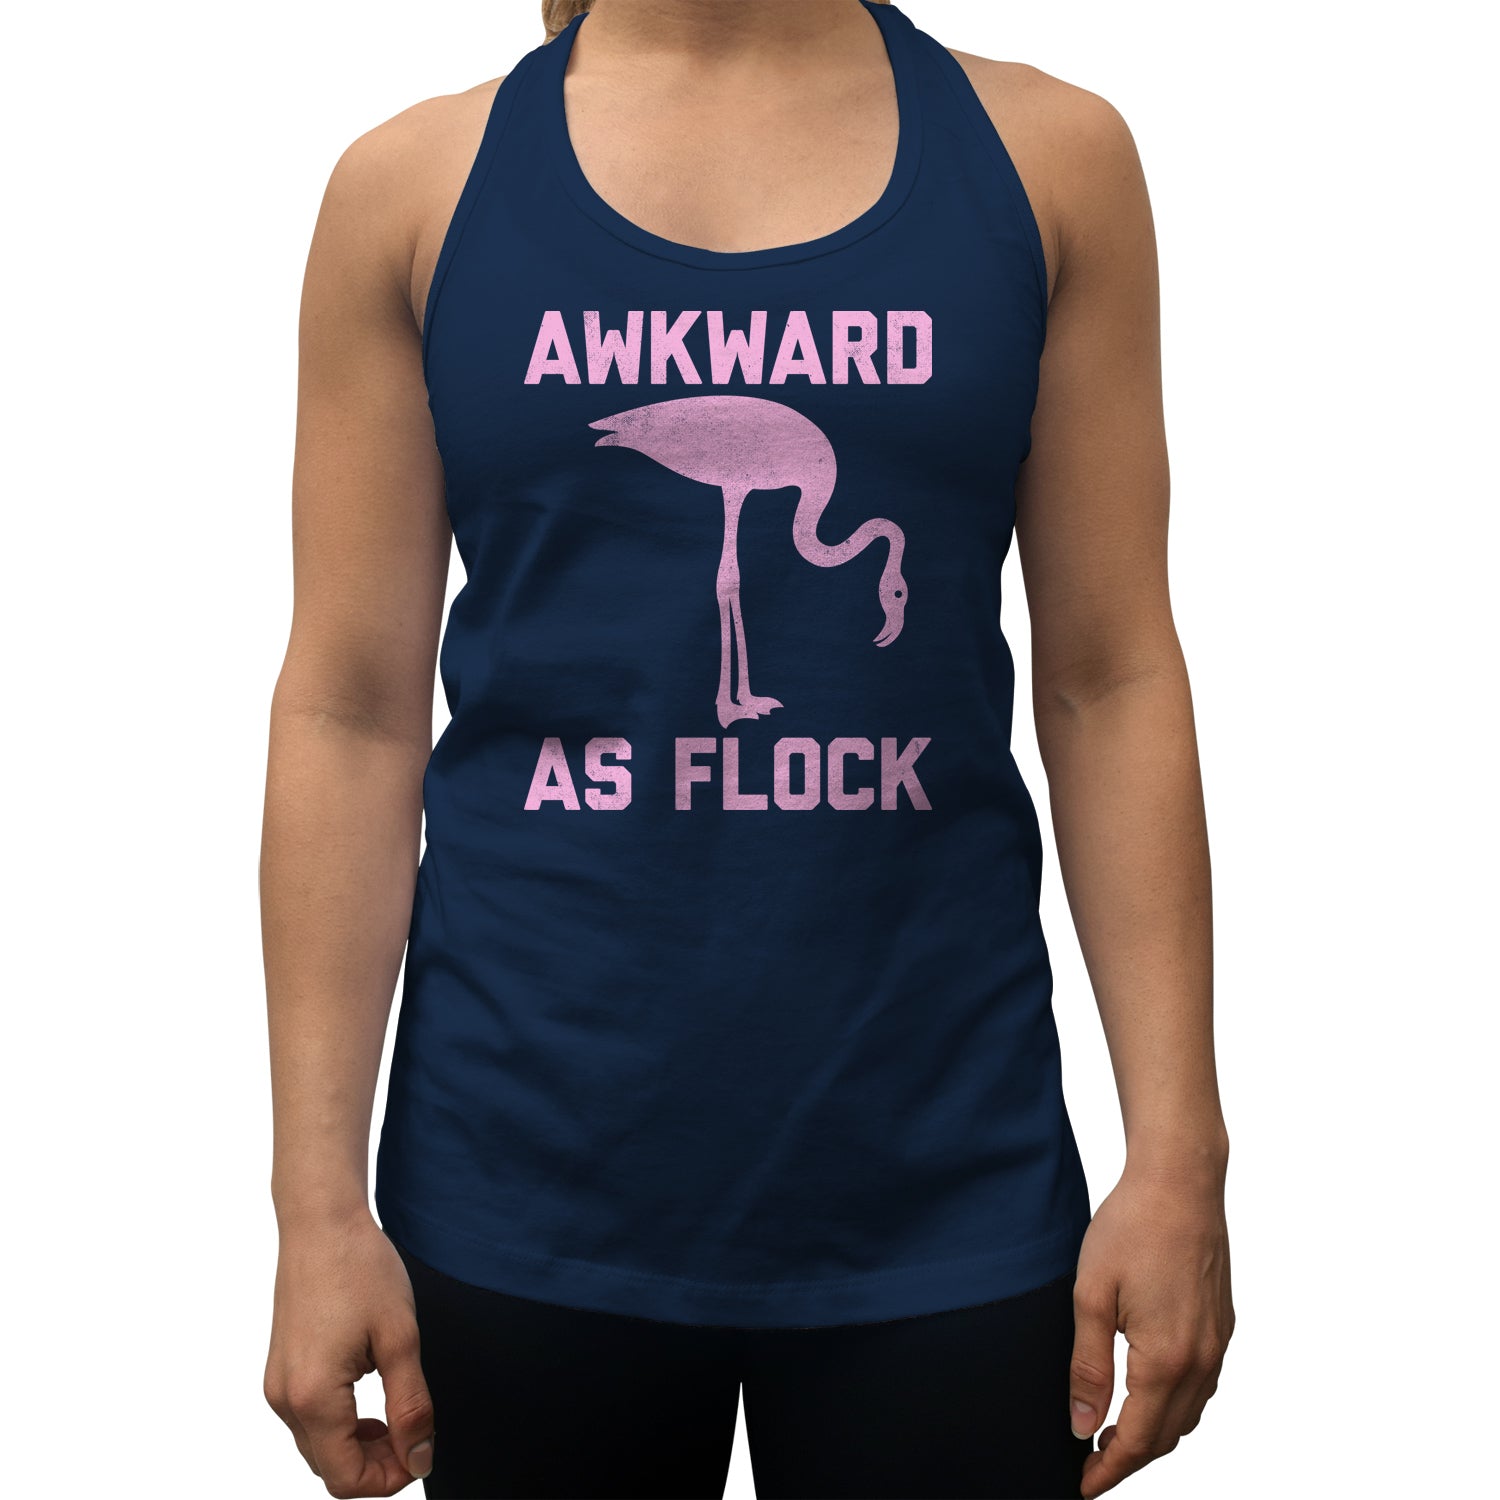 Women's Awkward as Flock Flamingo Racerback Tank Top